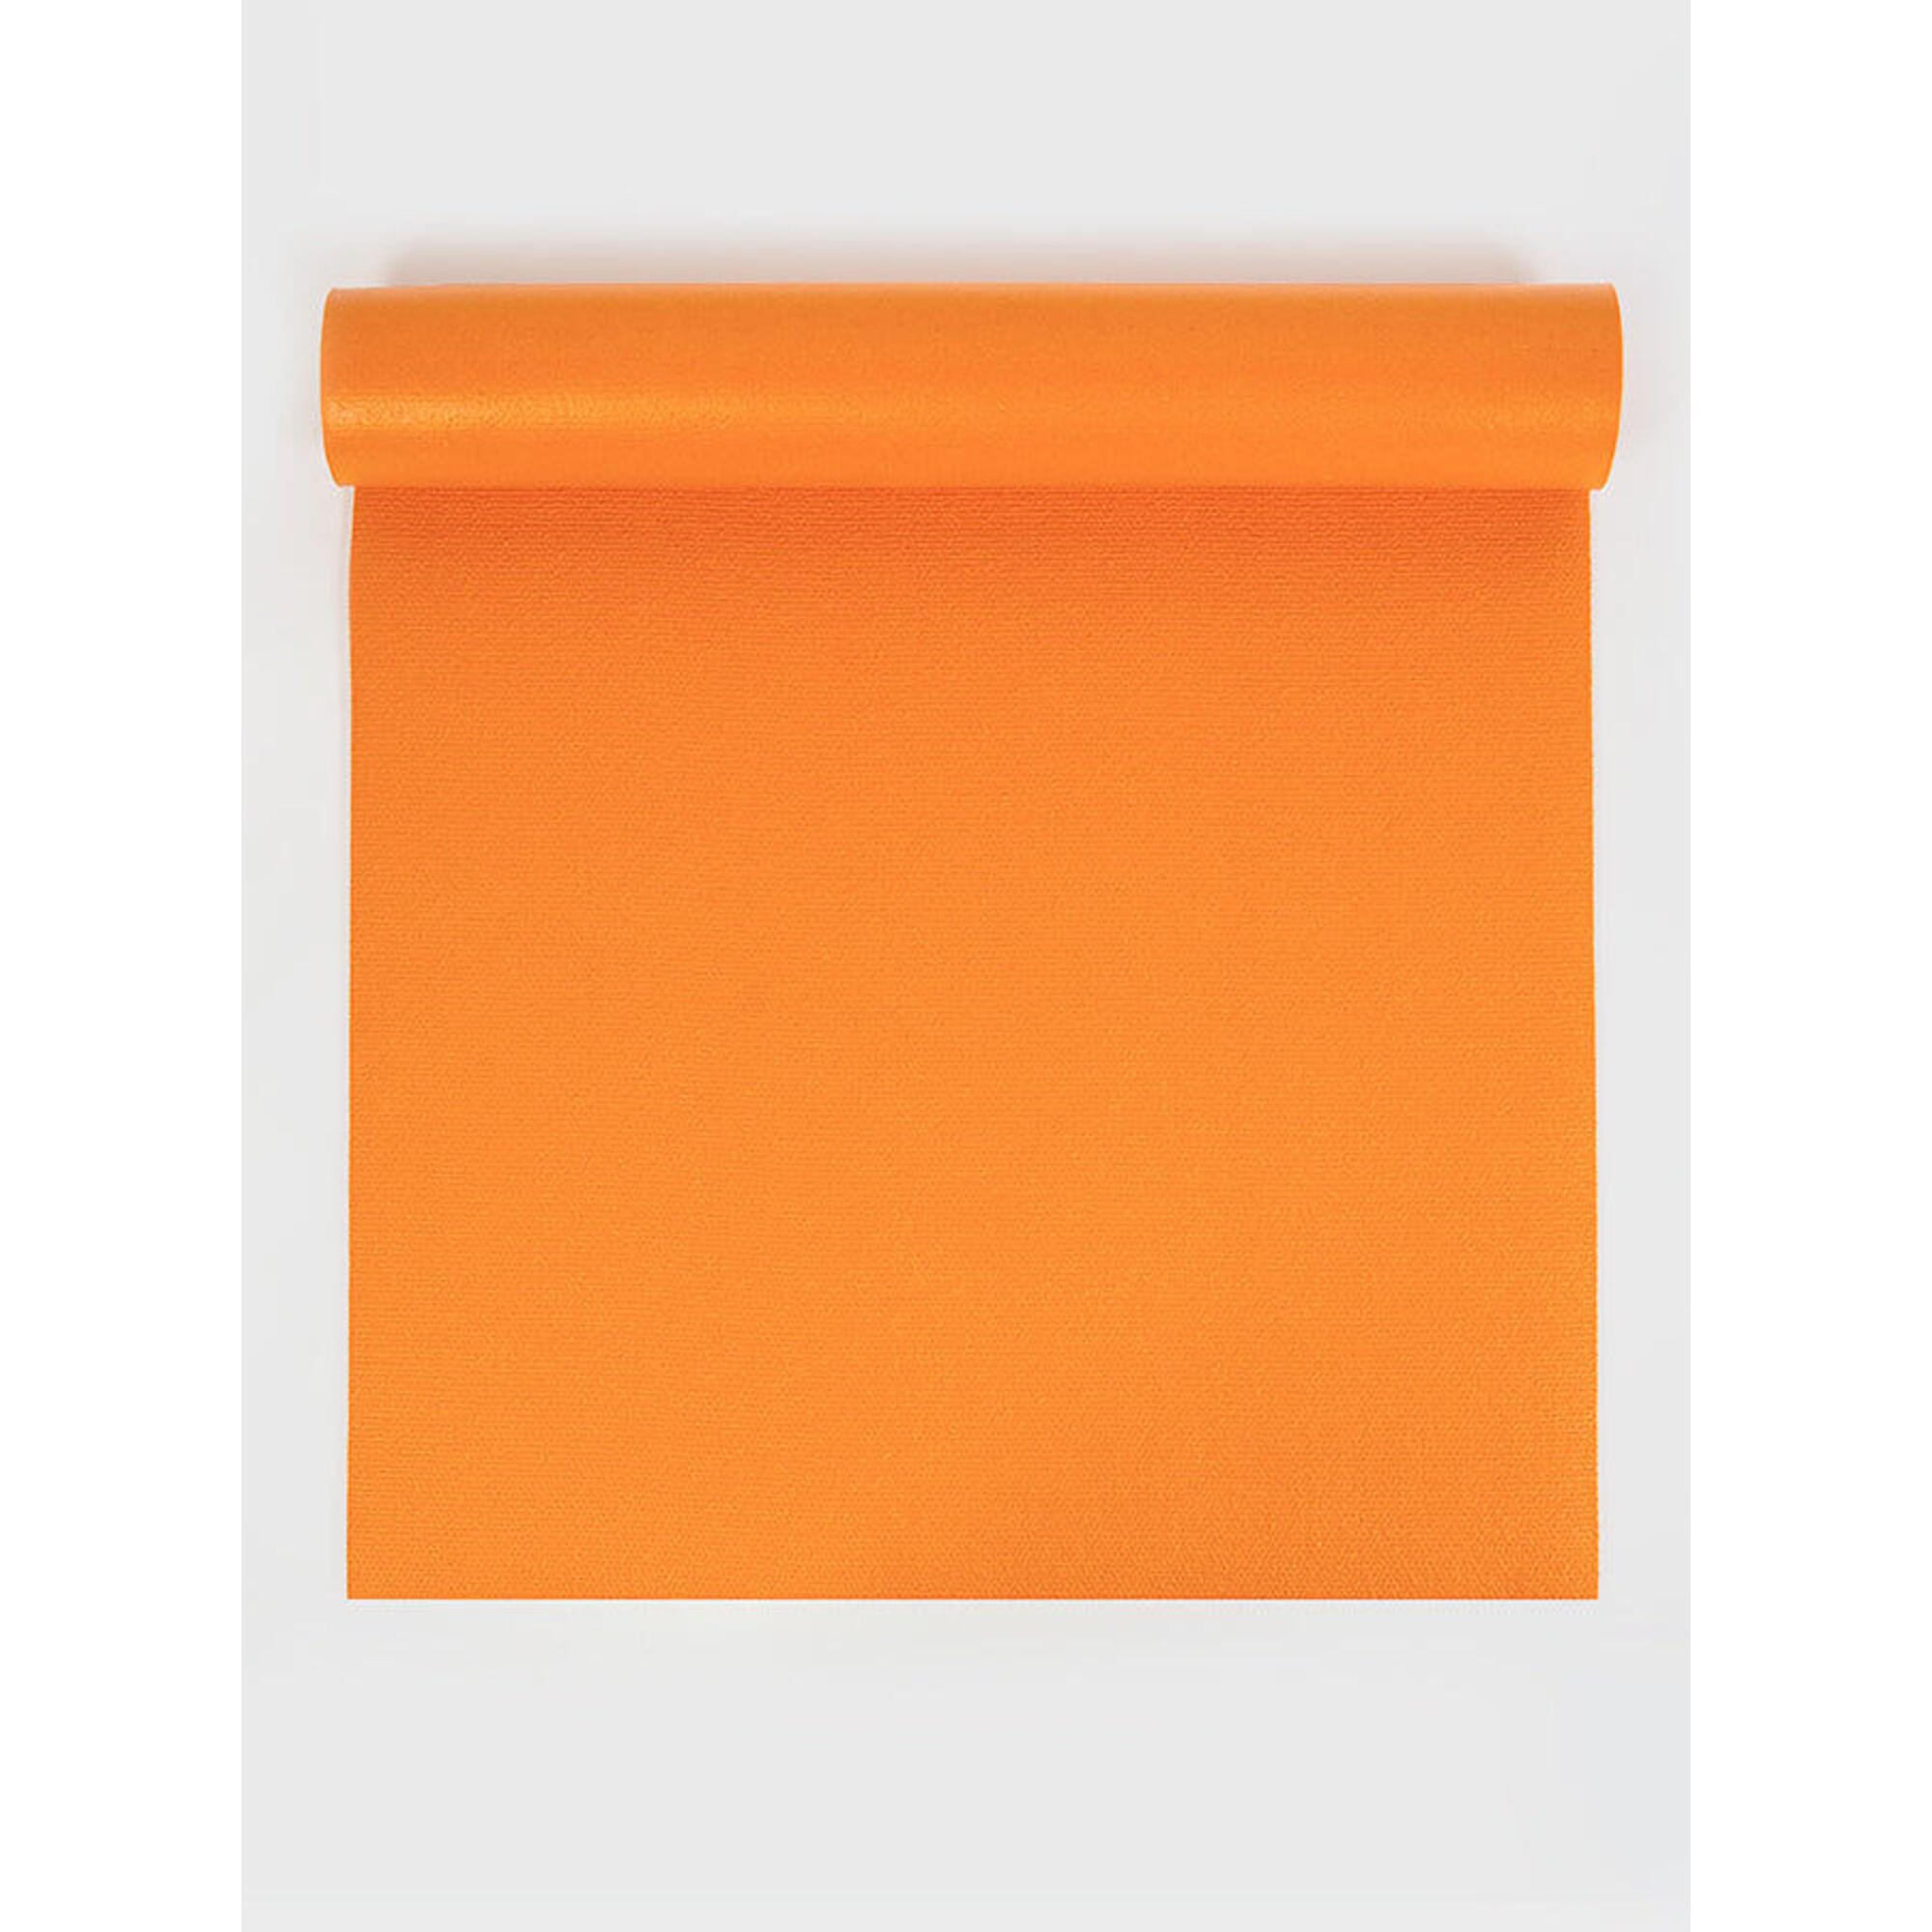 YOGA STUDIO Yoga Studio Oeko-Tex Original Sticky Yoga Mat 4.5mm - Tangerine Orange